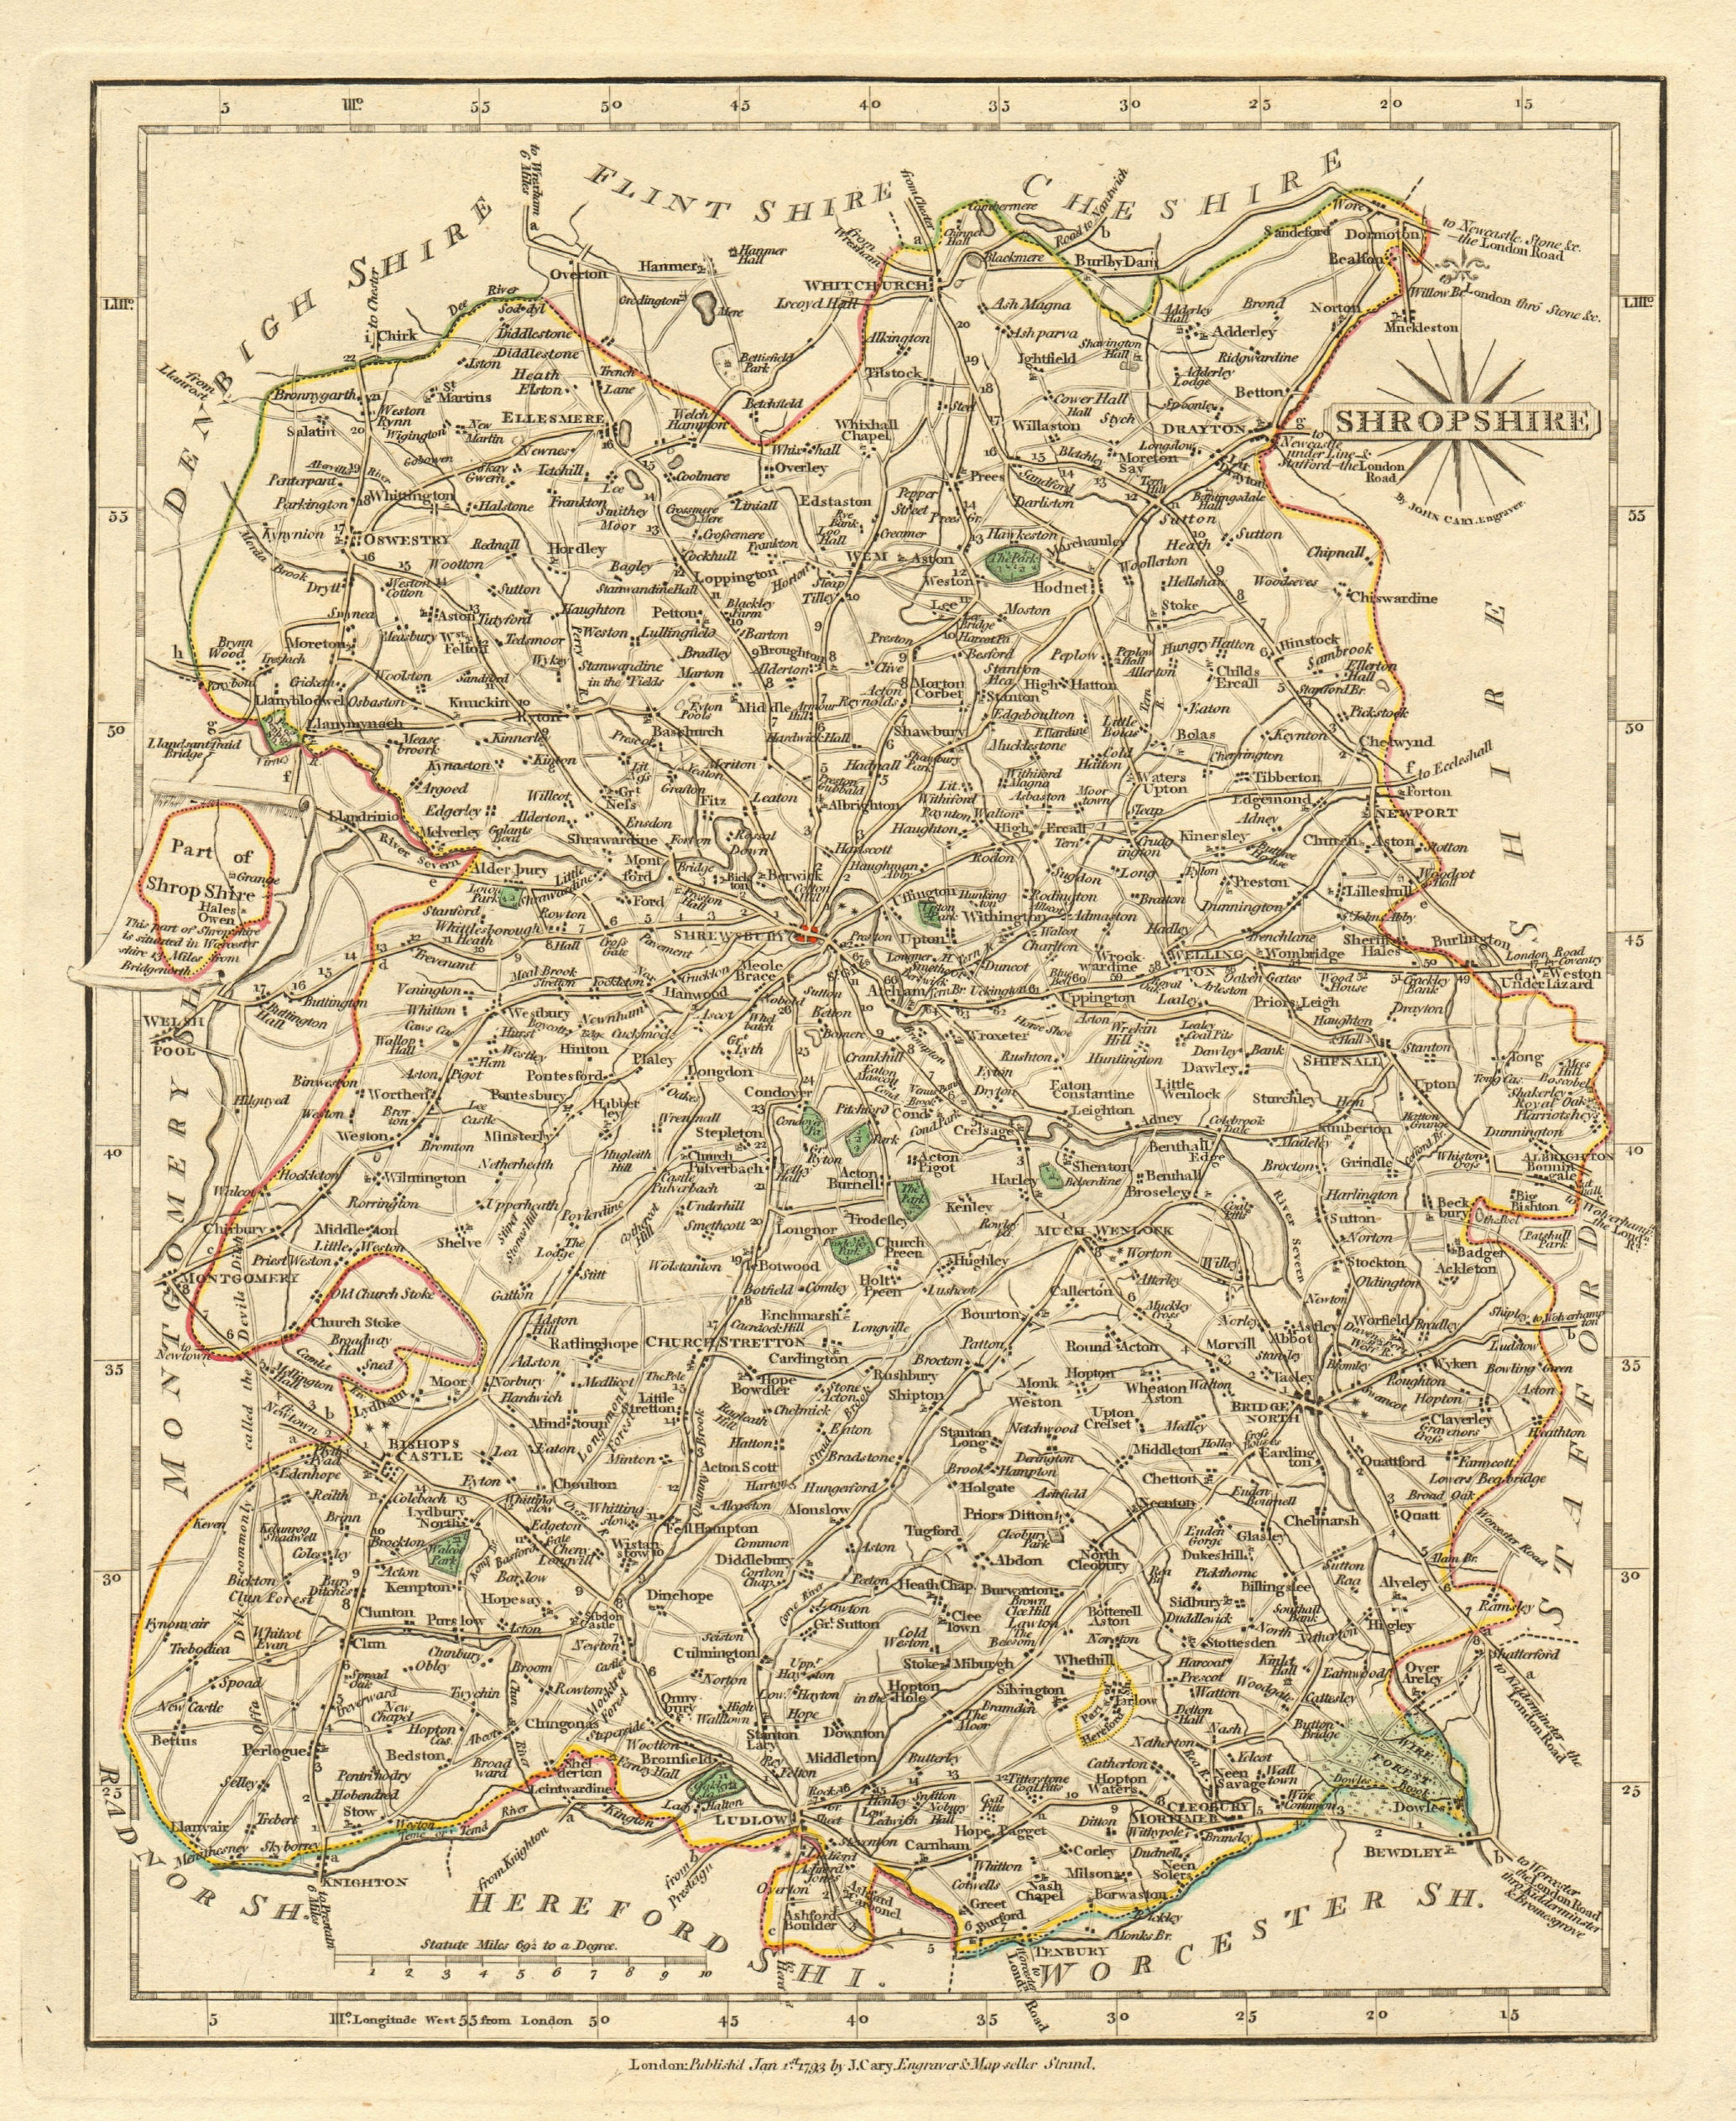 Associate Product Antique county map of SHROPSHIRE by JOHN CARY. Original outline colour 1793